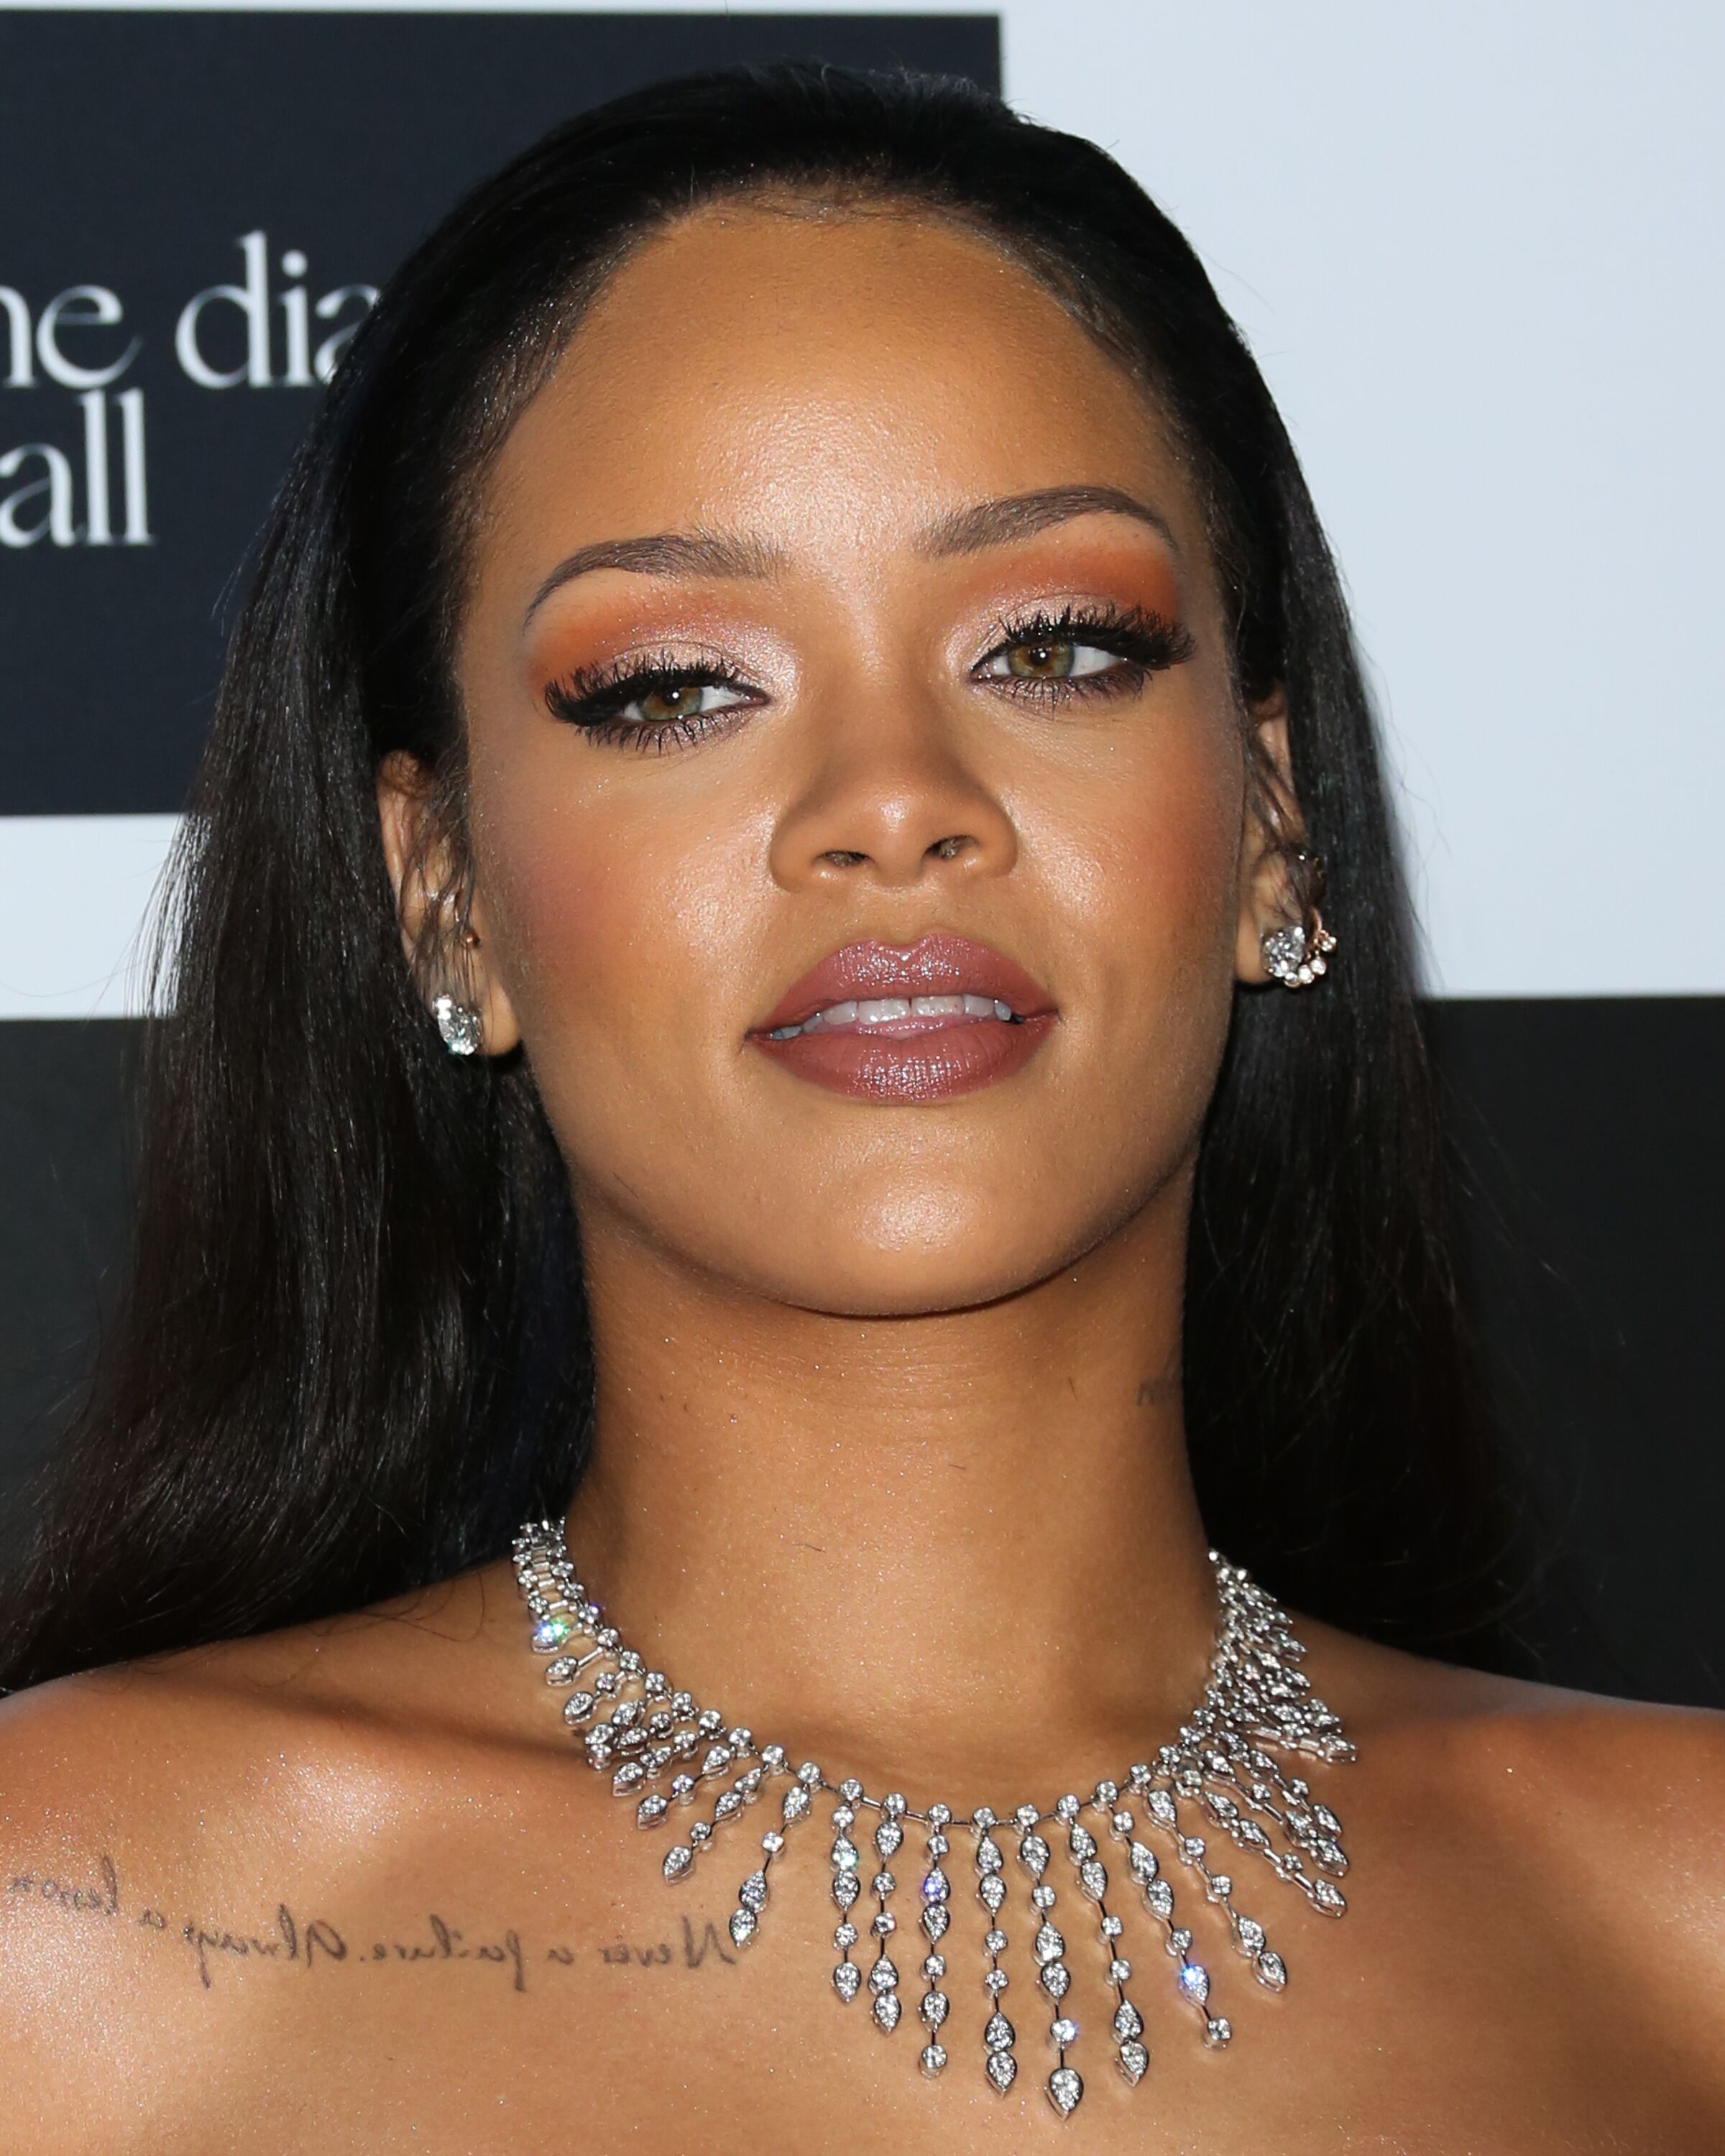 Singer Rihanna/ Source: Getty Images